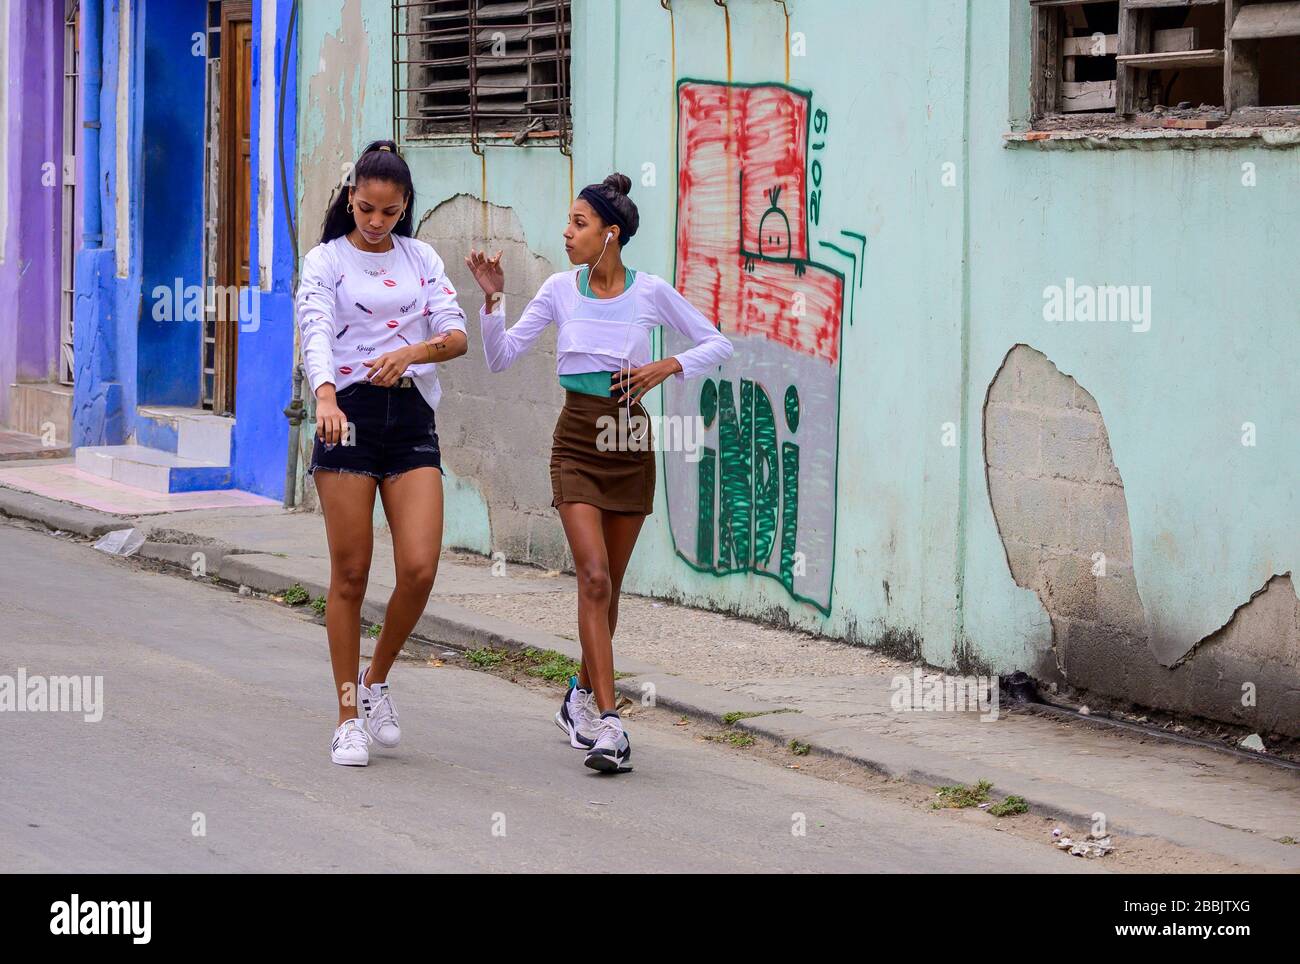 Junge Frauen gehen an bunten Wänden vorbei, Havanna, Kuba Stockfoto